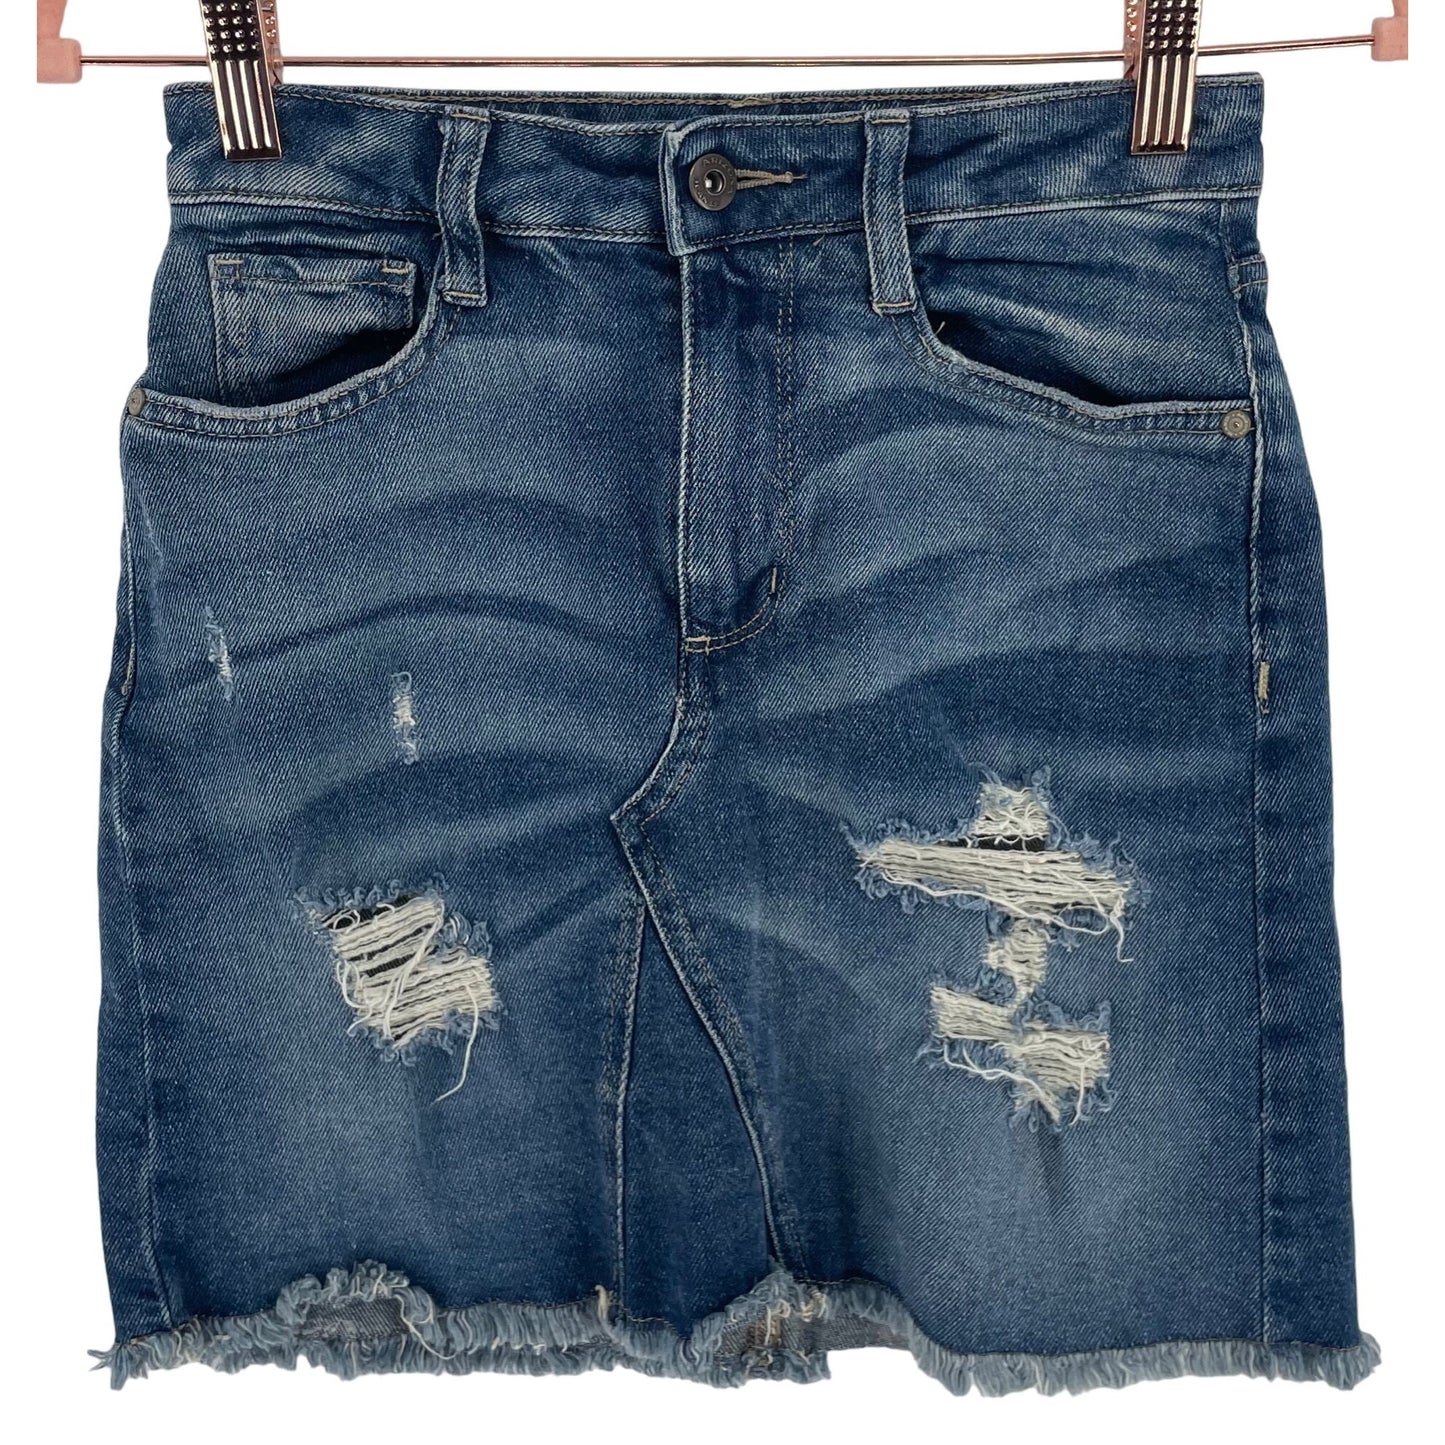 Arizona Jean Company Women'sJuniors Size 1 Blue Jean Denim Distressed Skirt